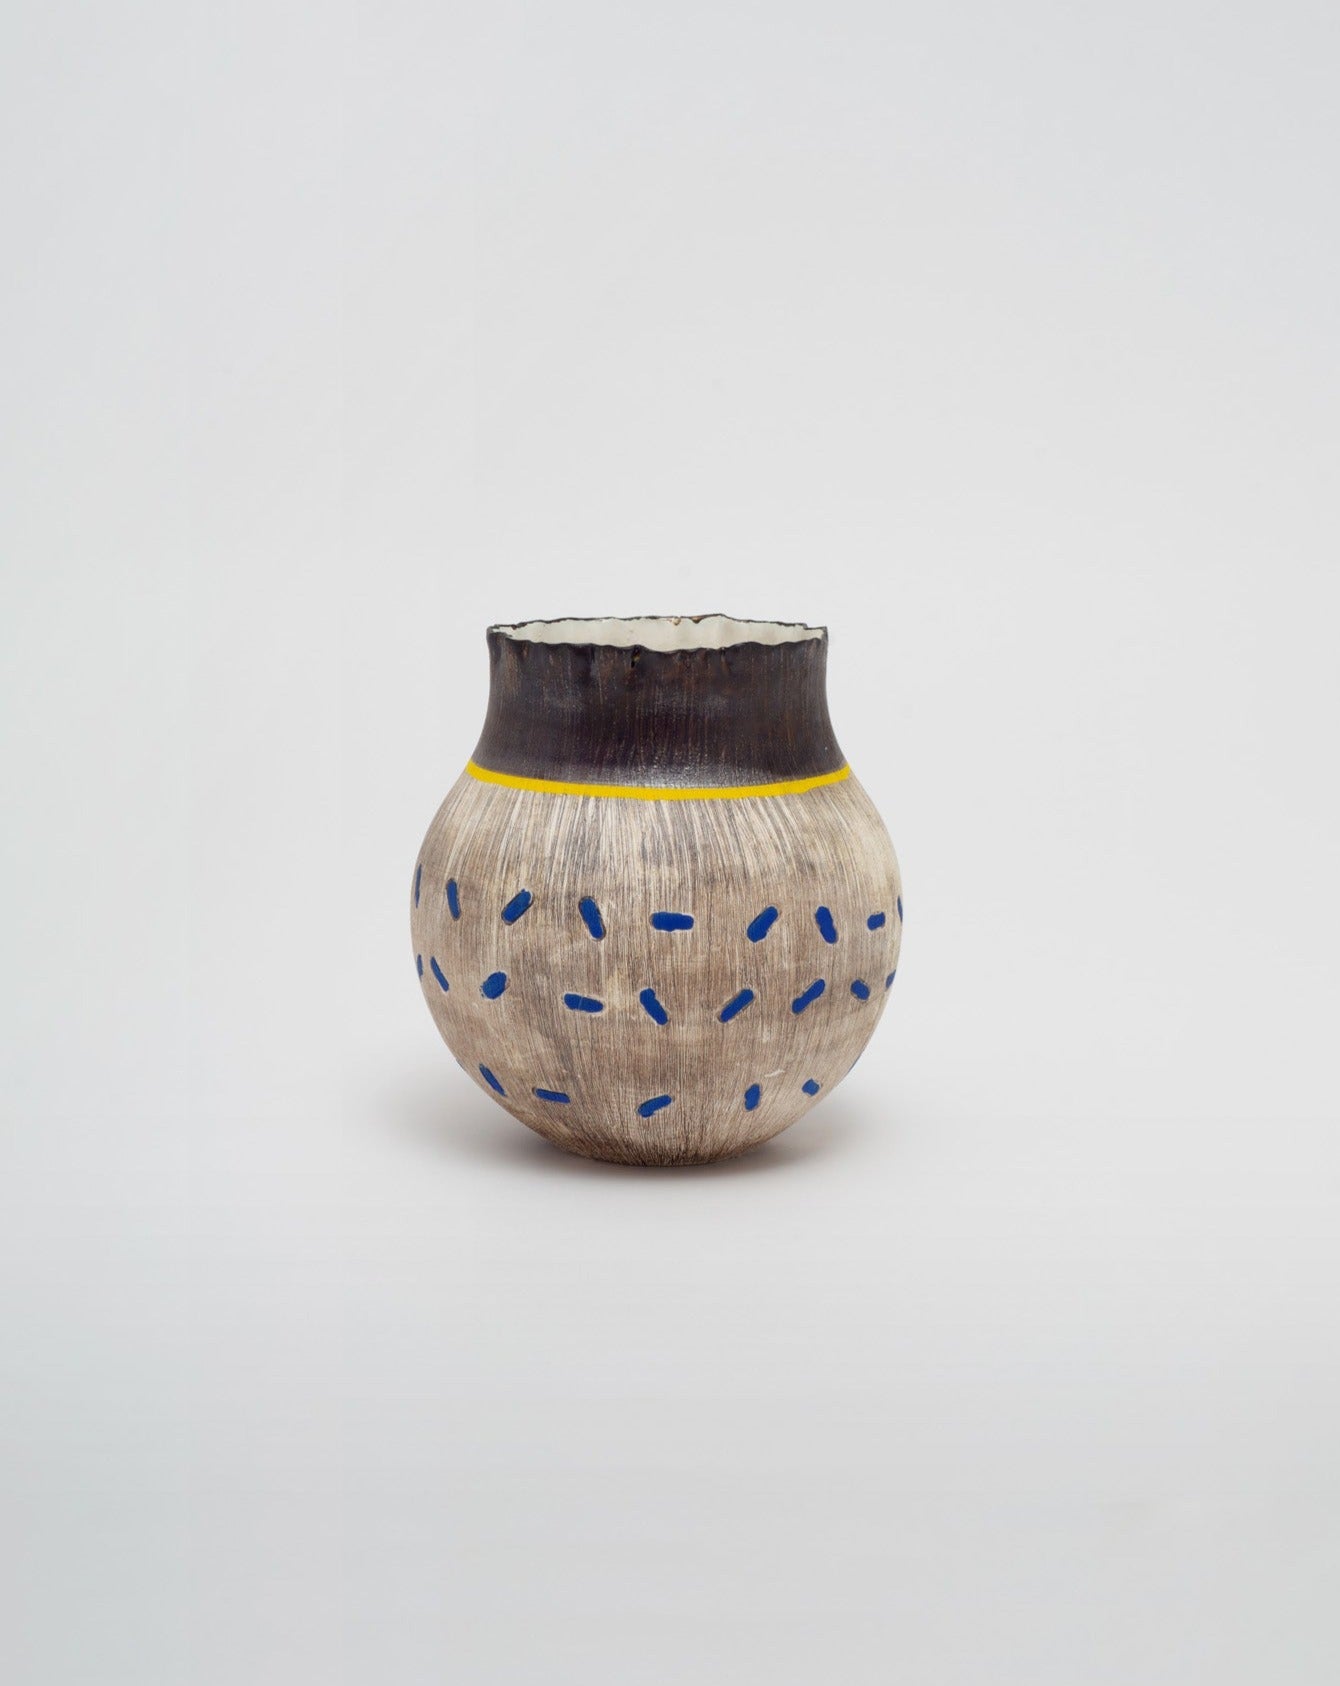 Handbuilt vase by Zizipho Poswa for Imiso ceramics